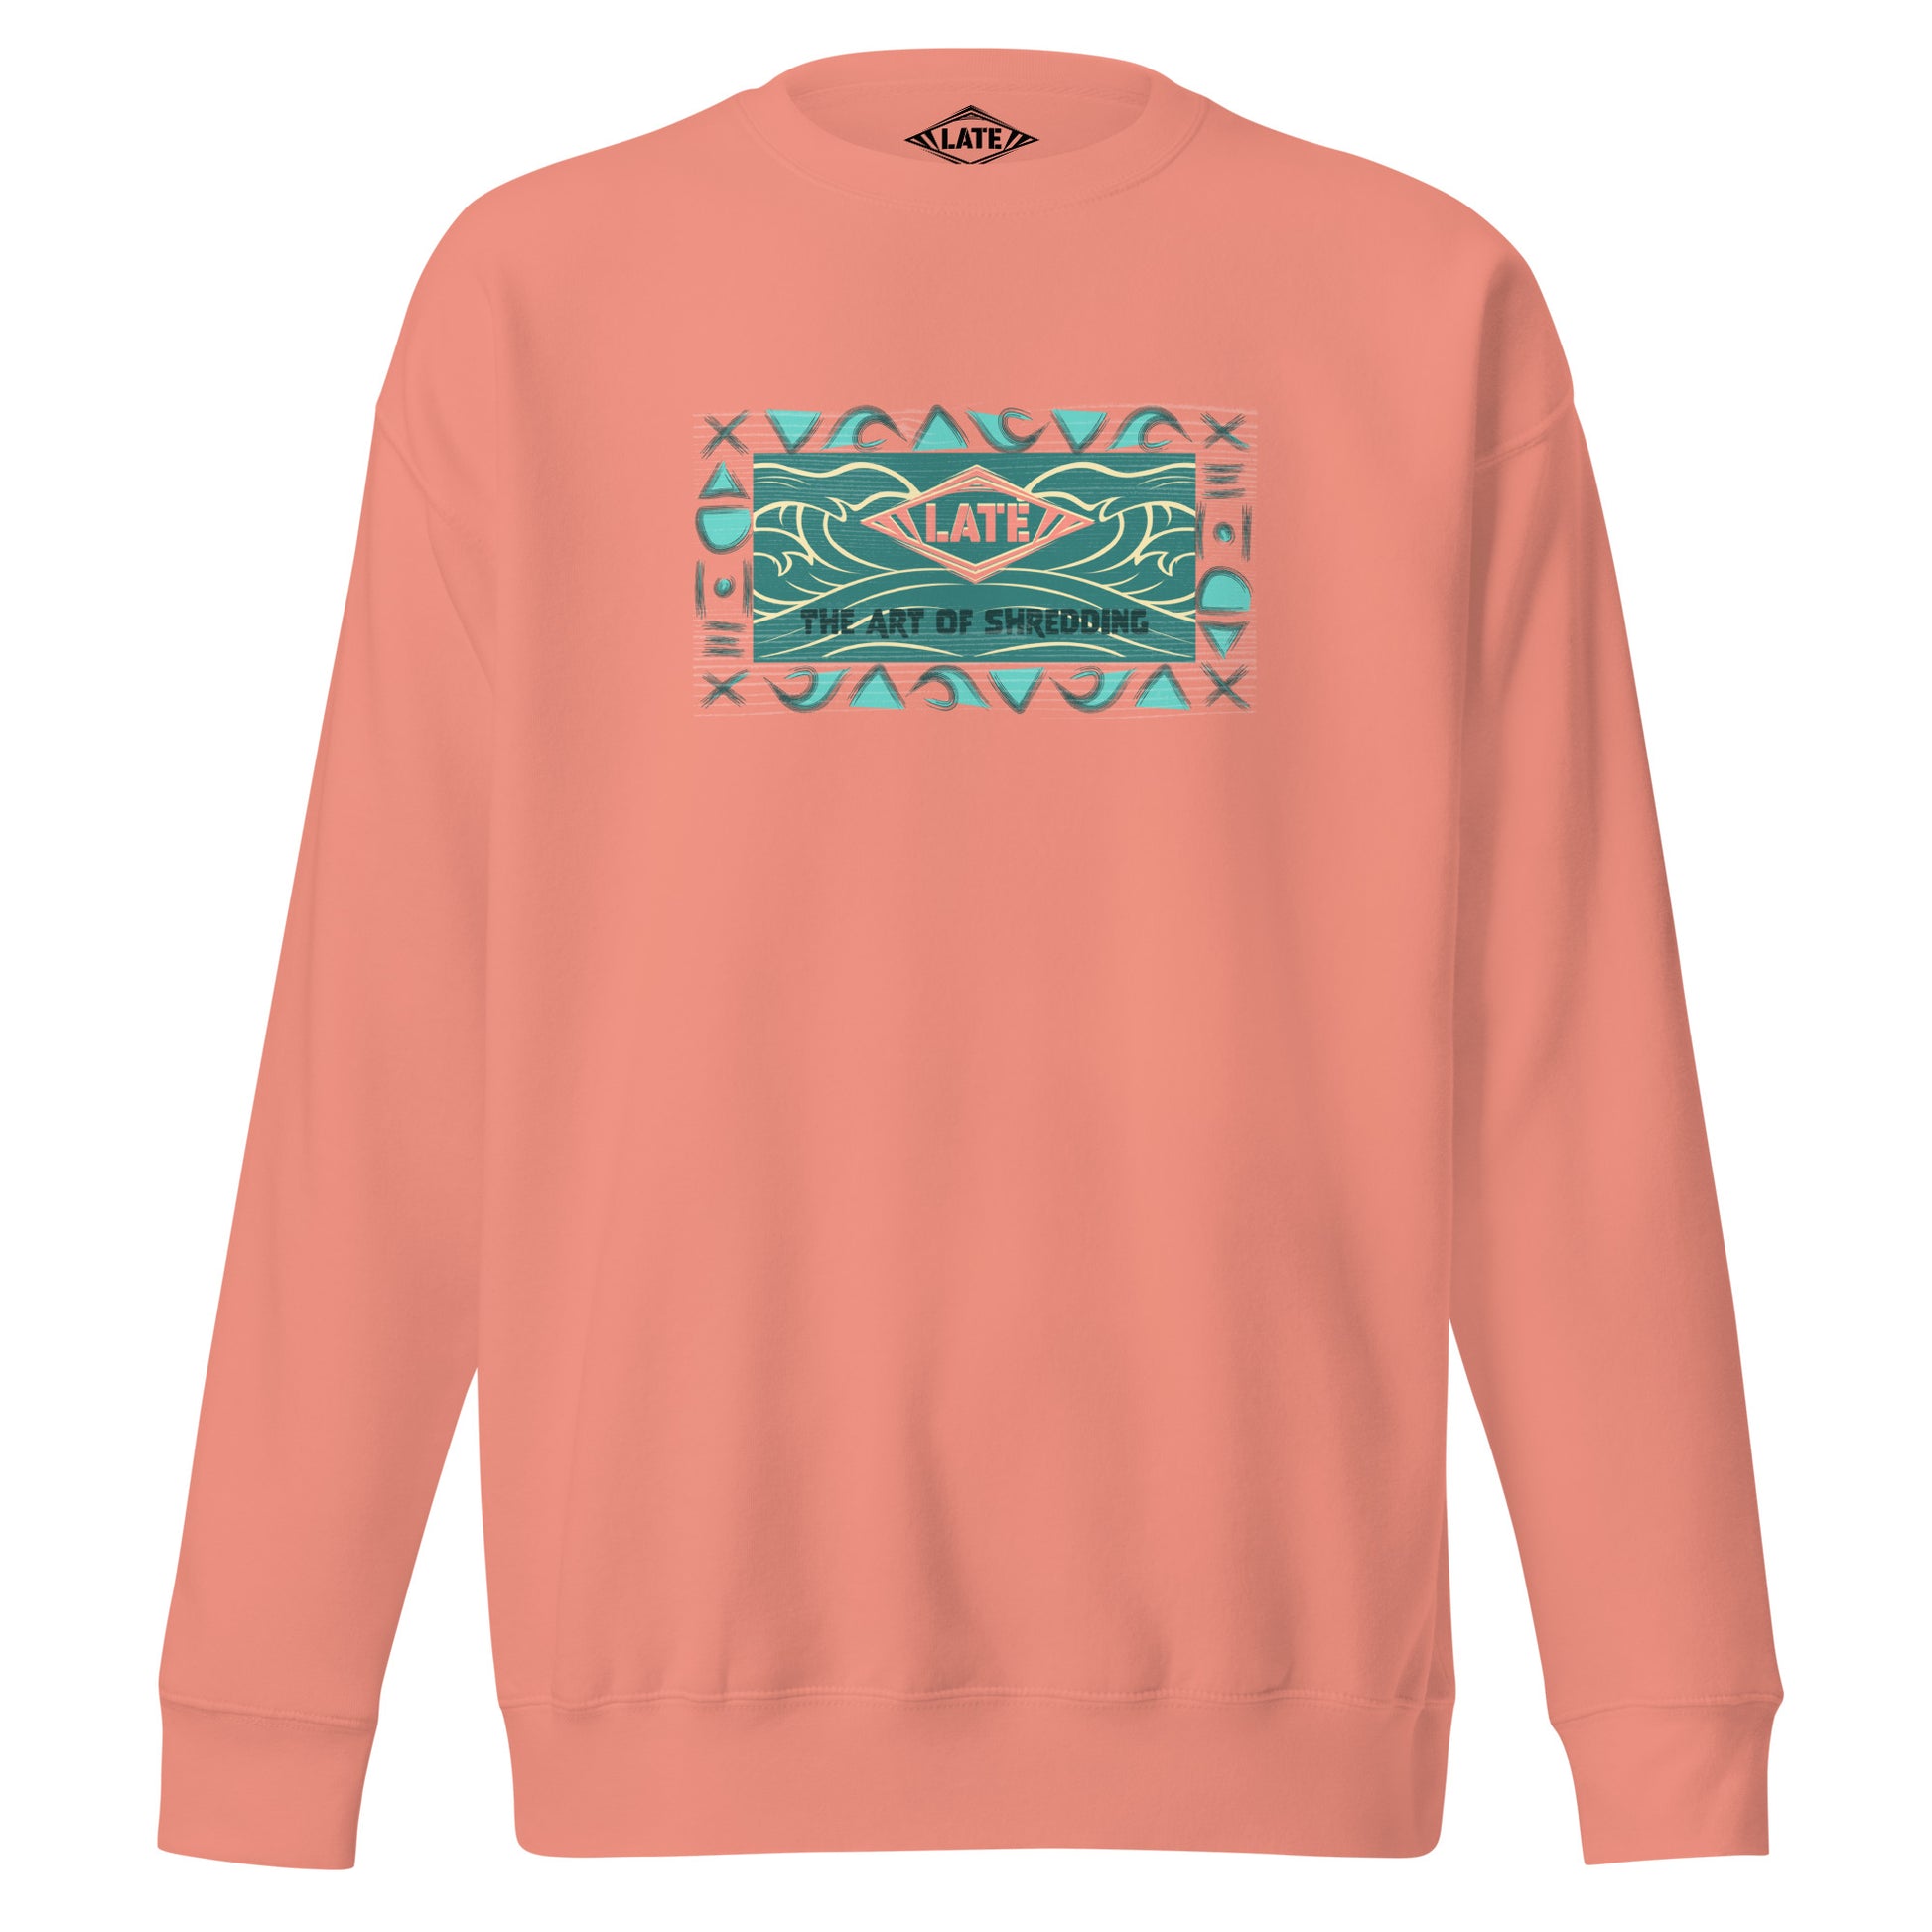 Pull vintage art of shredding, motifs hawaïen vagues, et océan avec le logo surfshop Late, sweatshirt unisex rose